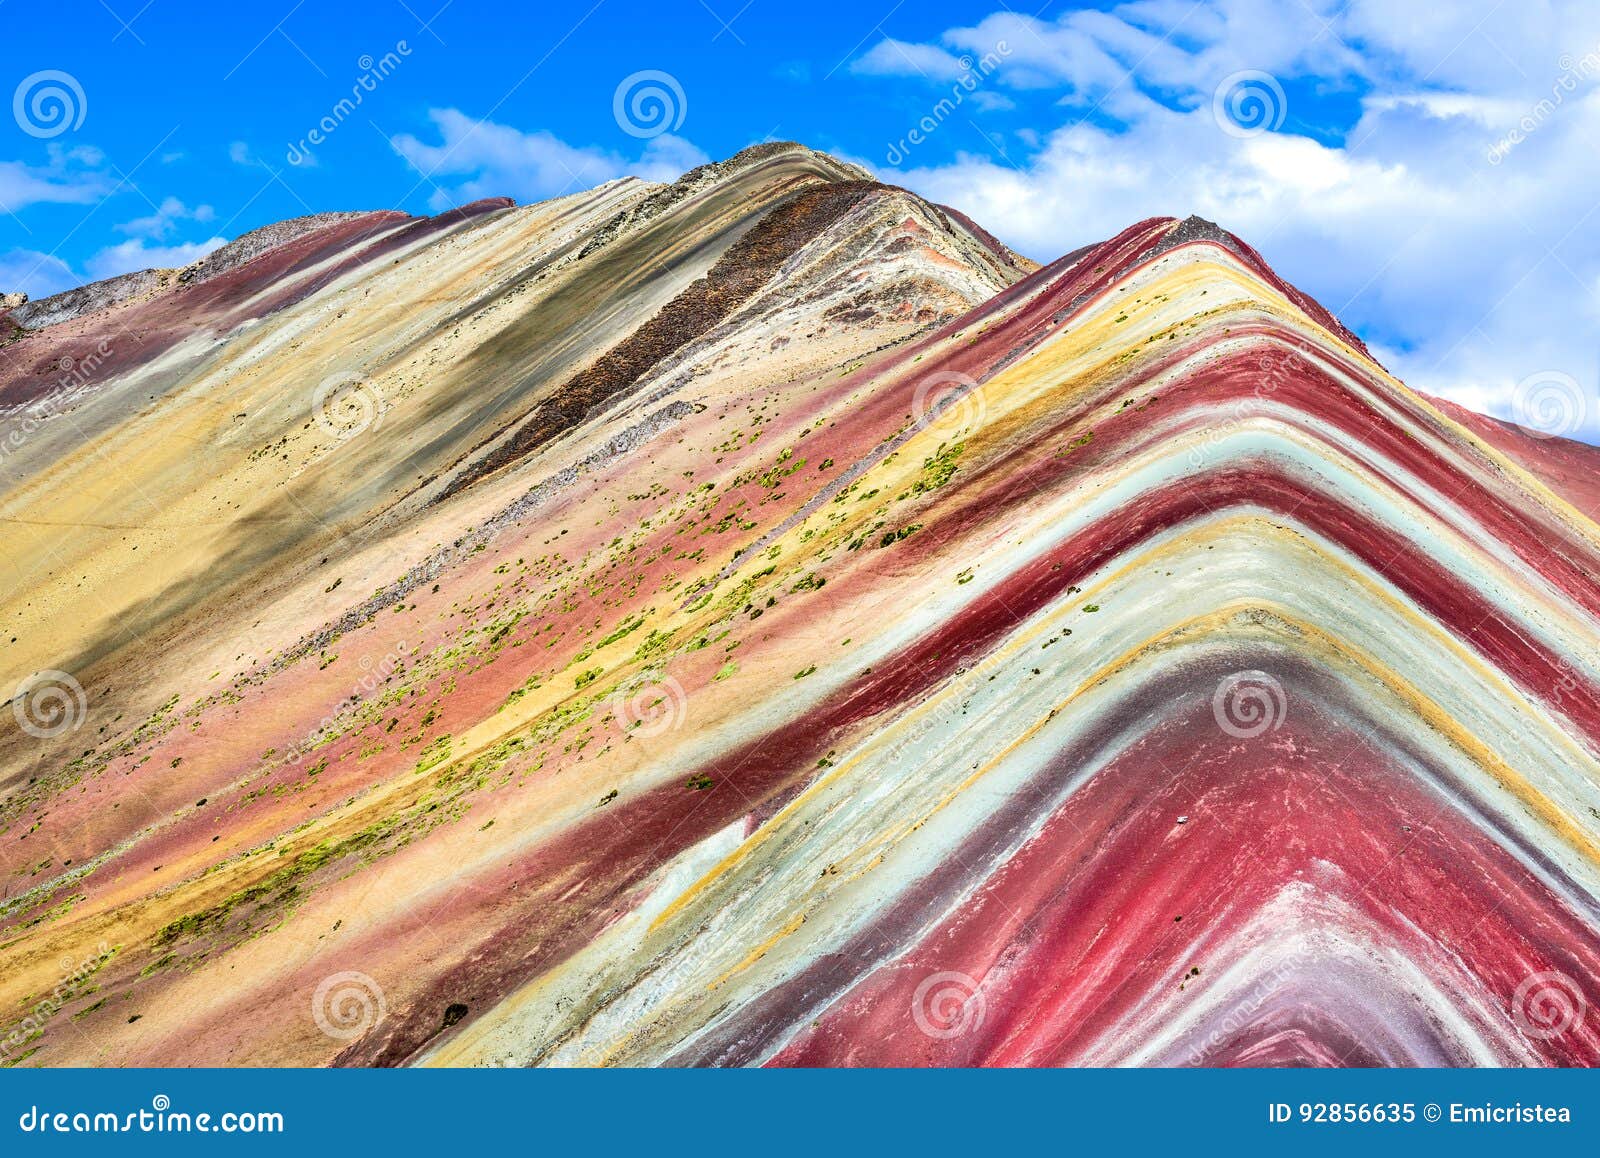 vinicunca, rainbow mountain - peru